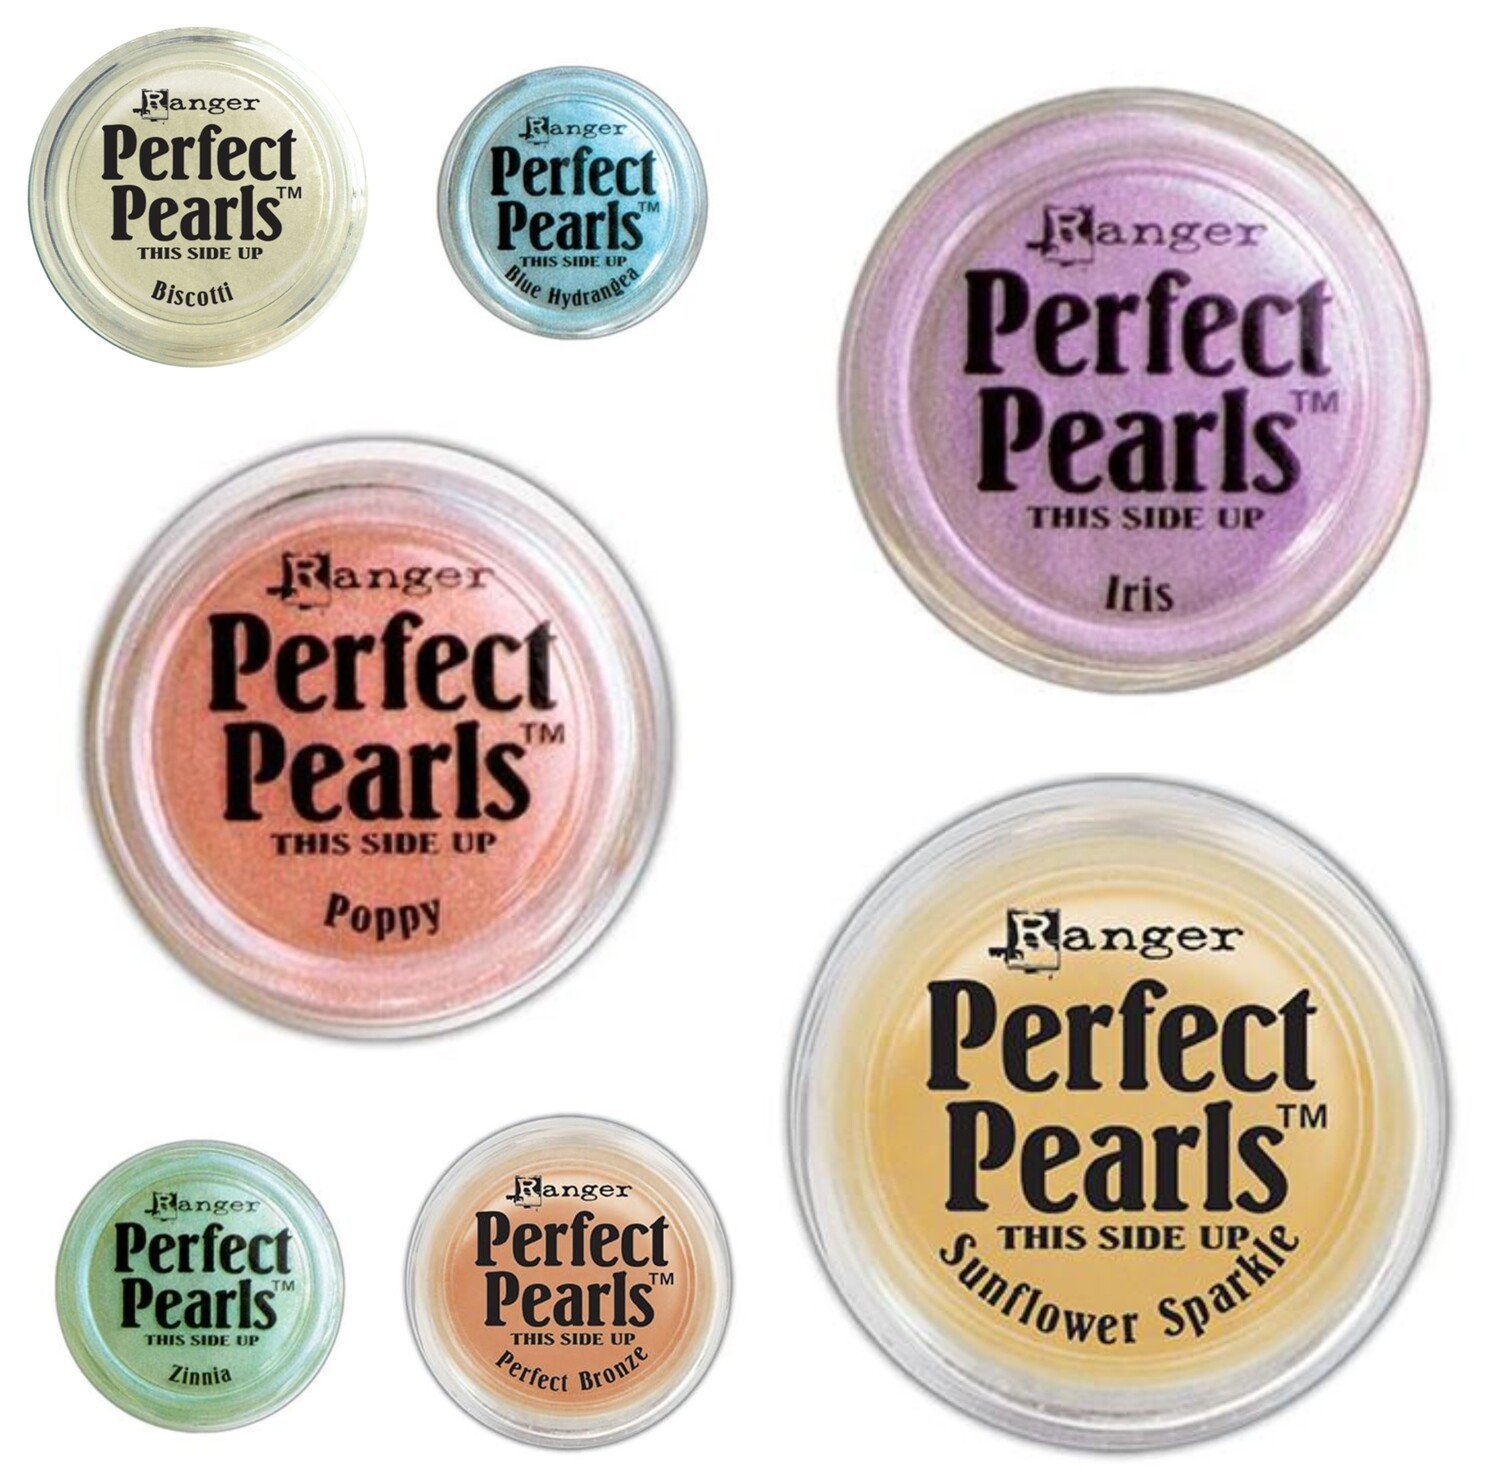 Perfect Pearls Pigment Powder - Ranger Inc